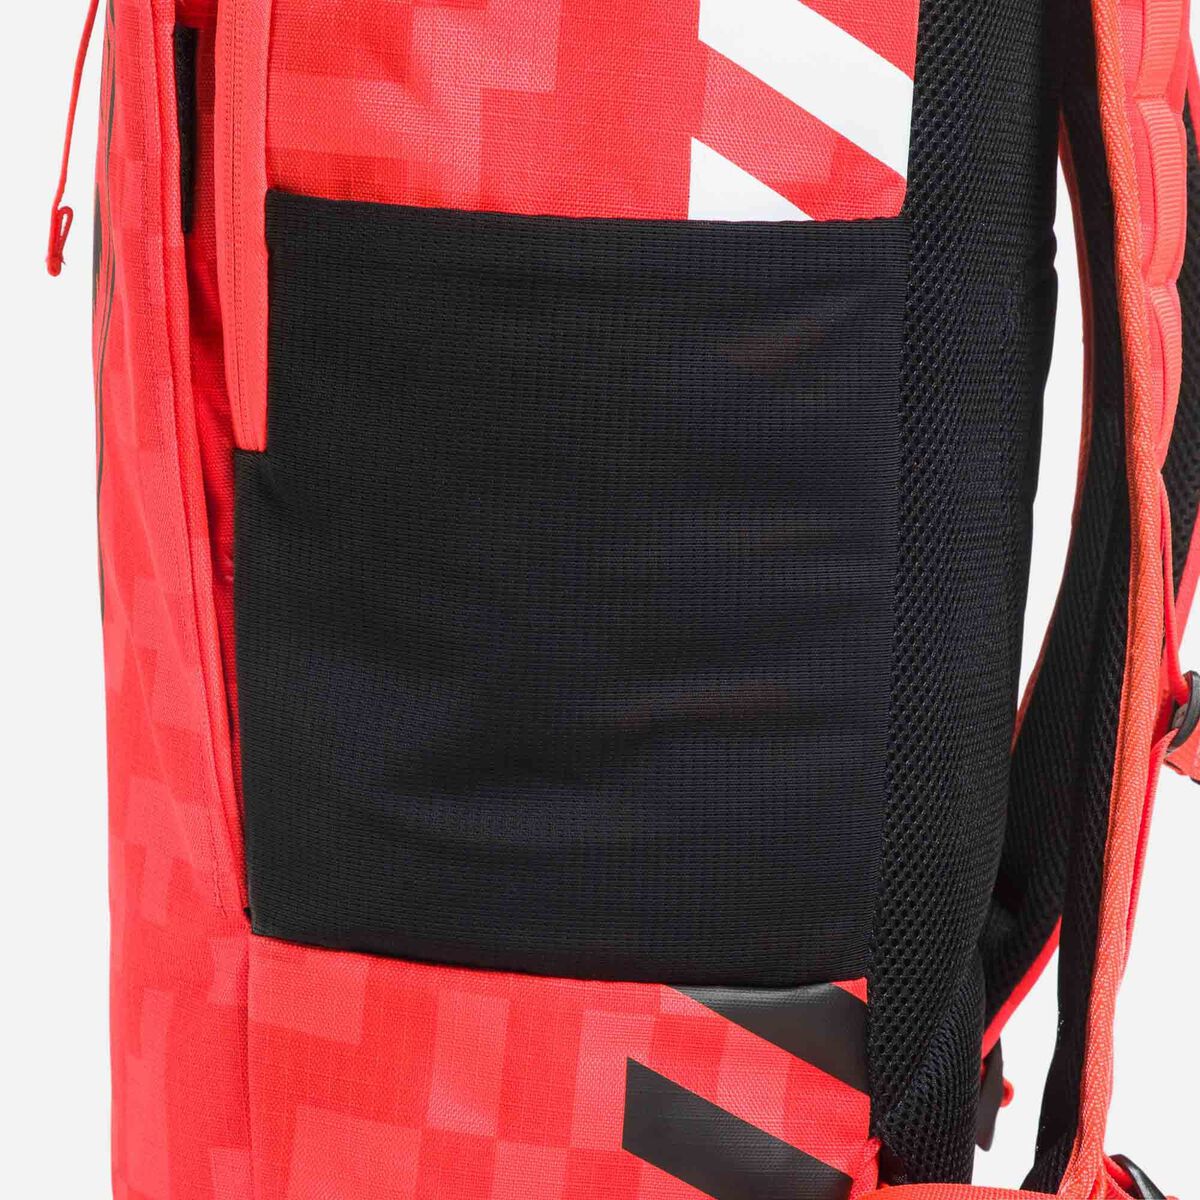 Rossignol Unisex Ski bag Hero Wheeled2/3P 210, Bags & Backpacks Unisex